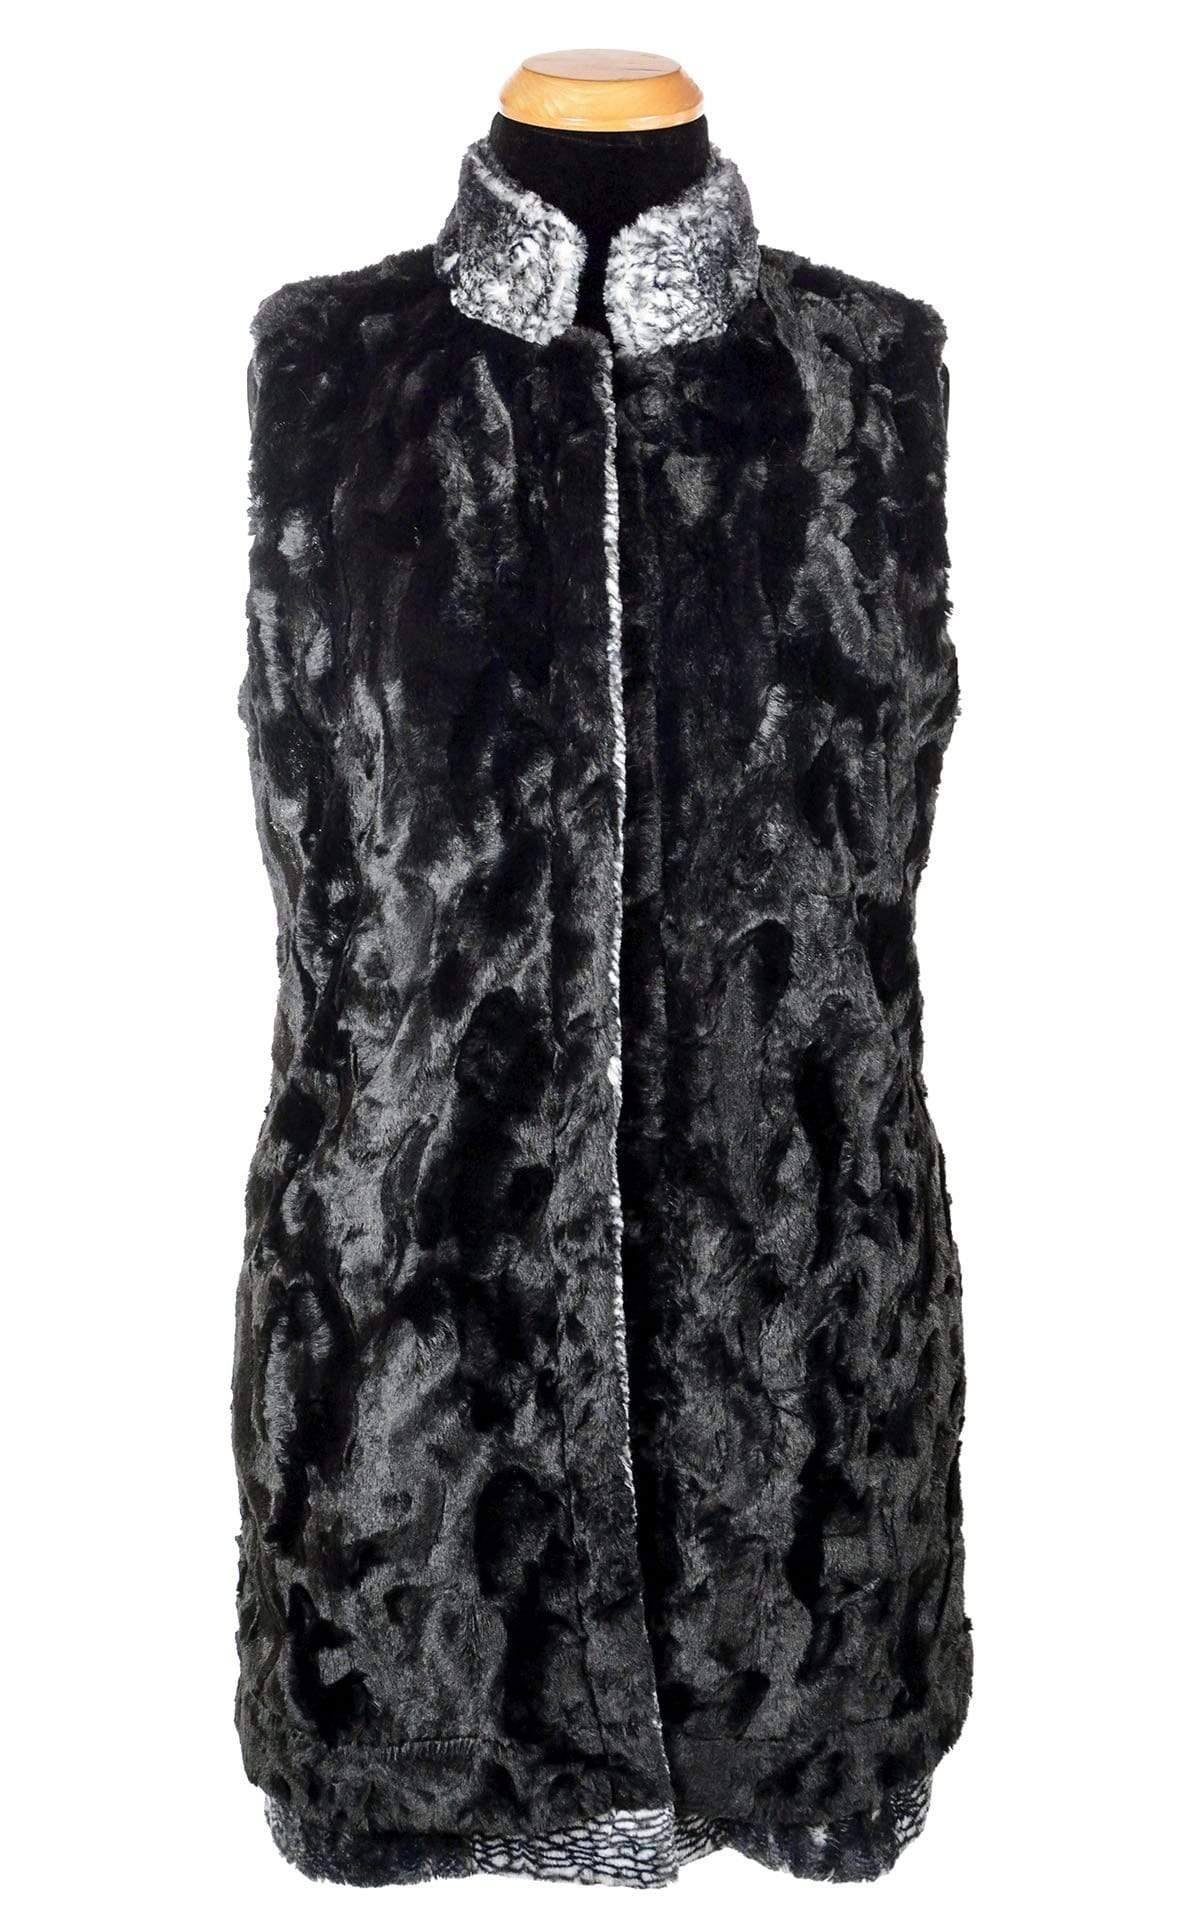 Reversed Mandarin Vest | Luxury Faux Fur in Black Mamba lined Cuddly Black | Handmade by Pandemonium Seattle USA